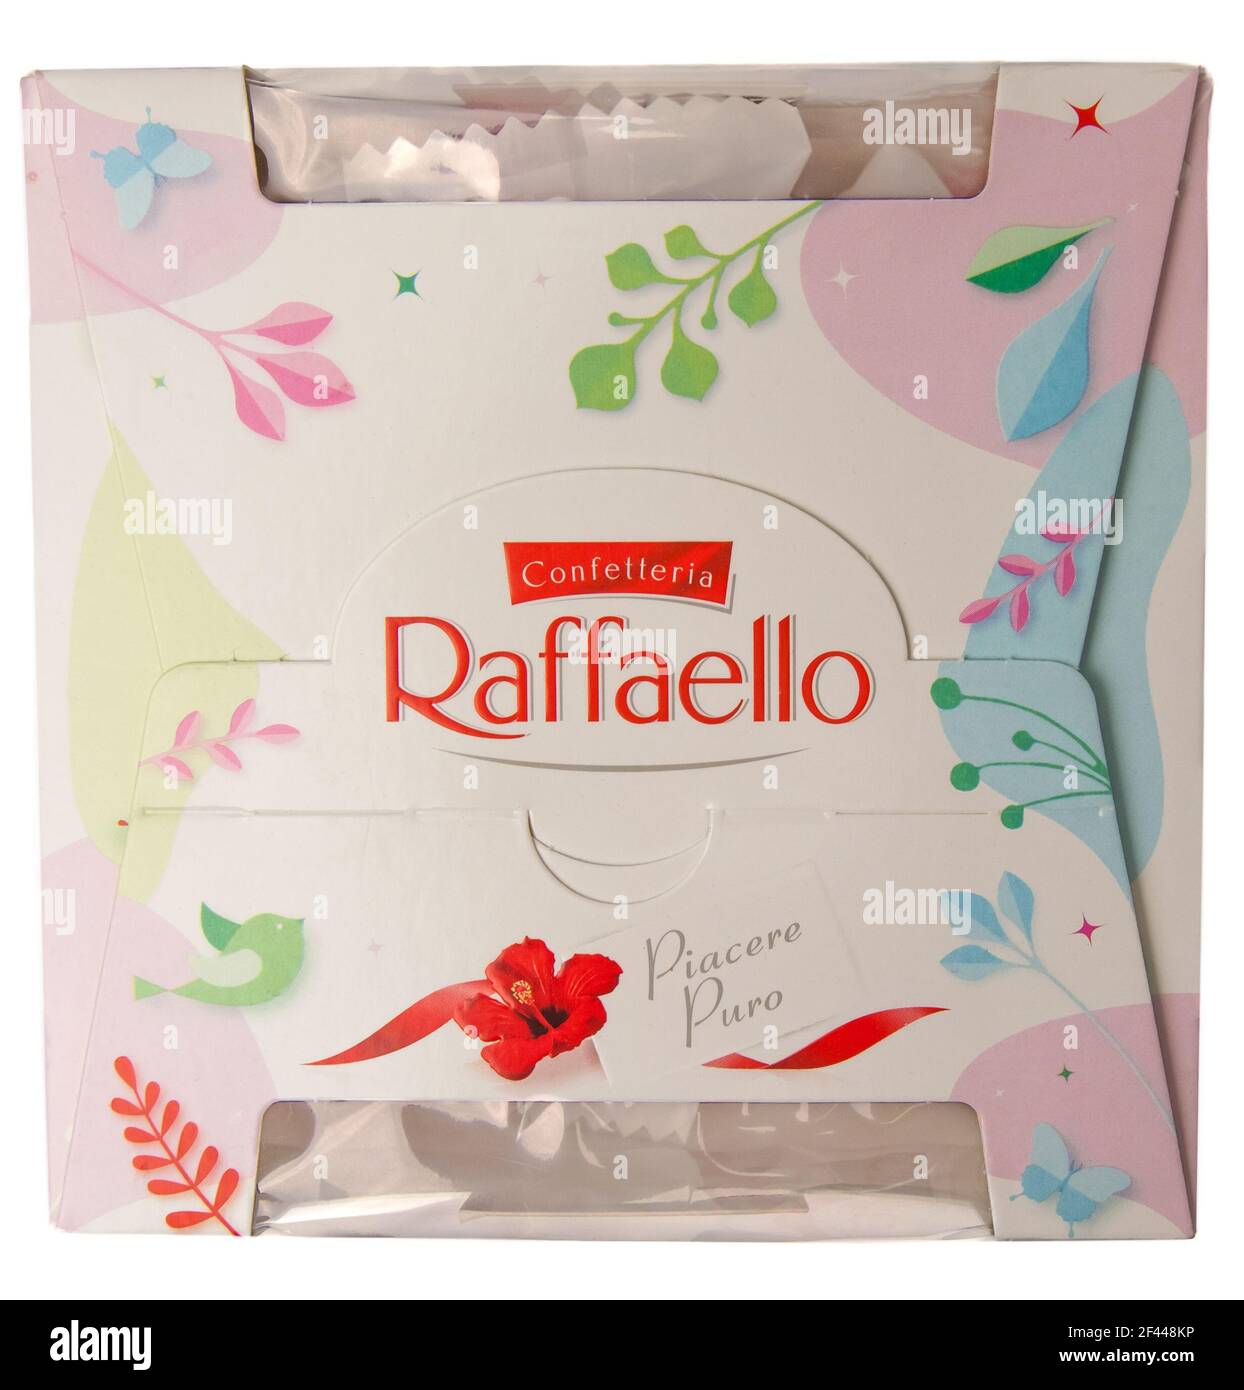 Raffaello ferrero Cut Out Stock Images & Pictures - Alamy